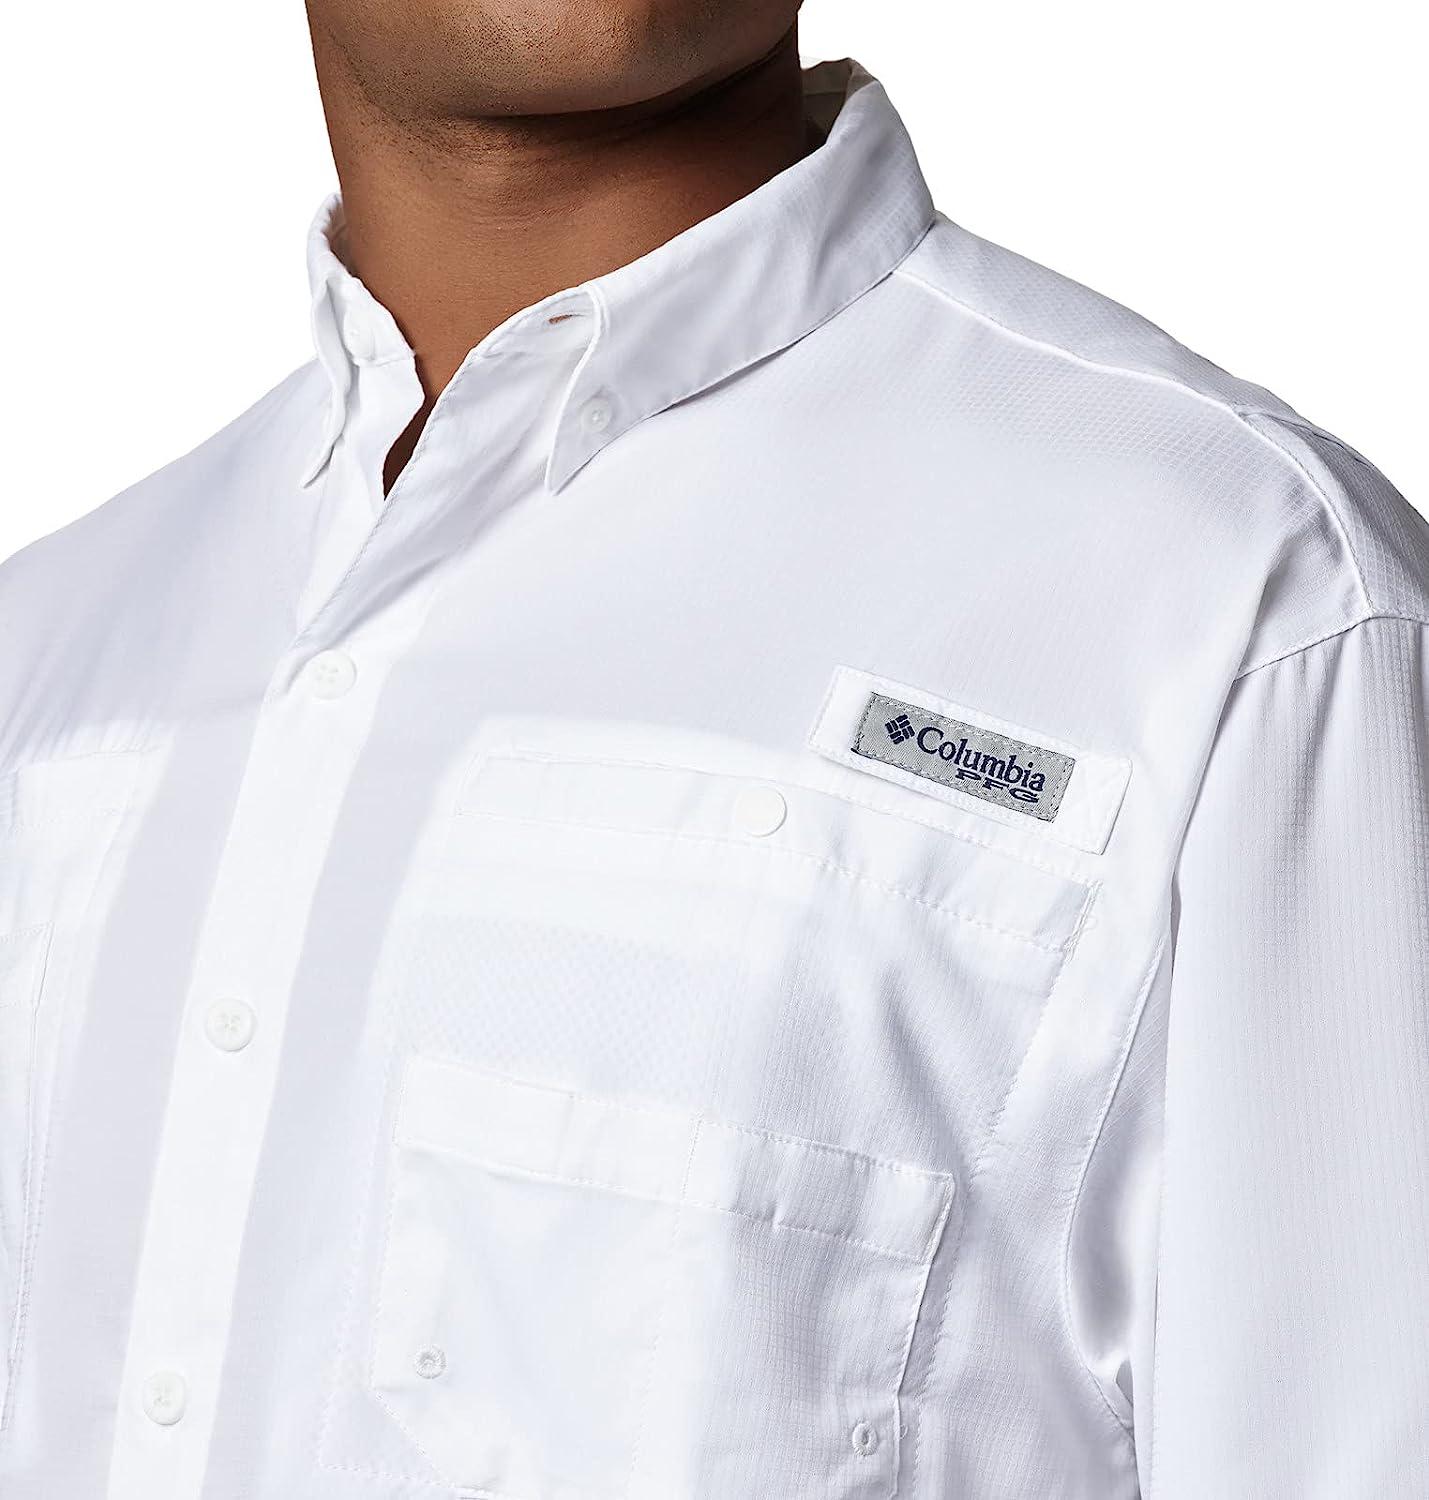 Mens columbia white shirt - Gem